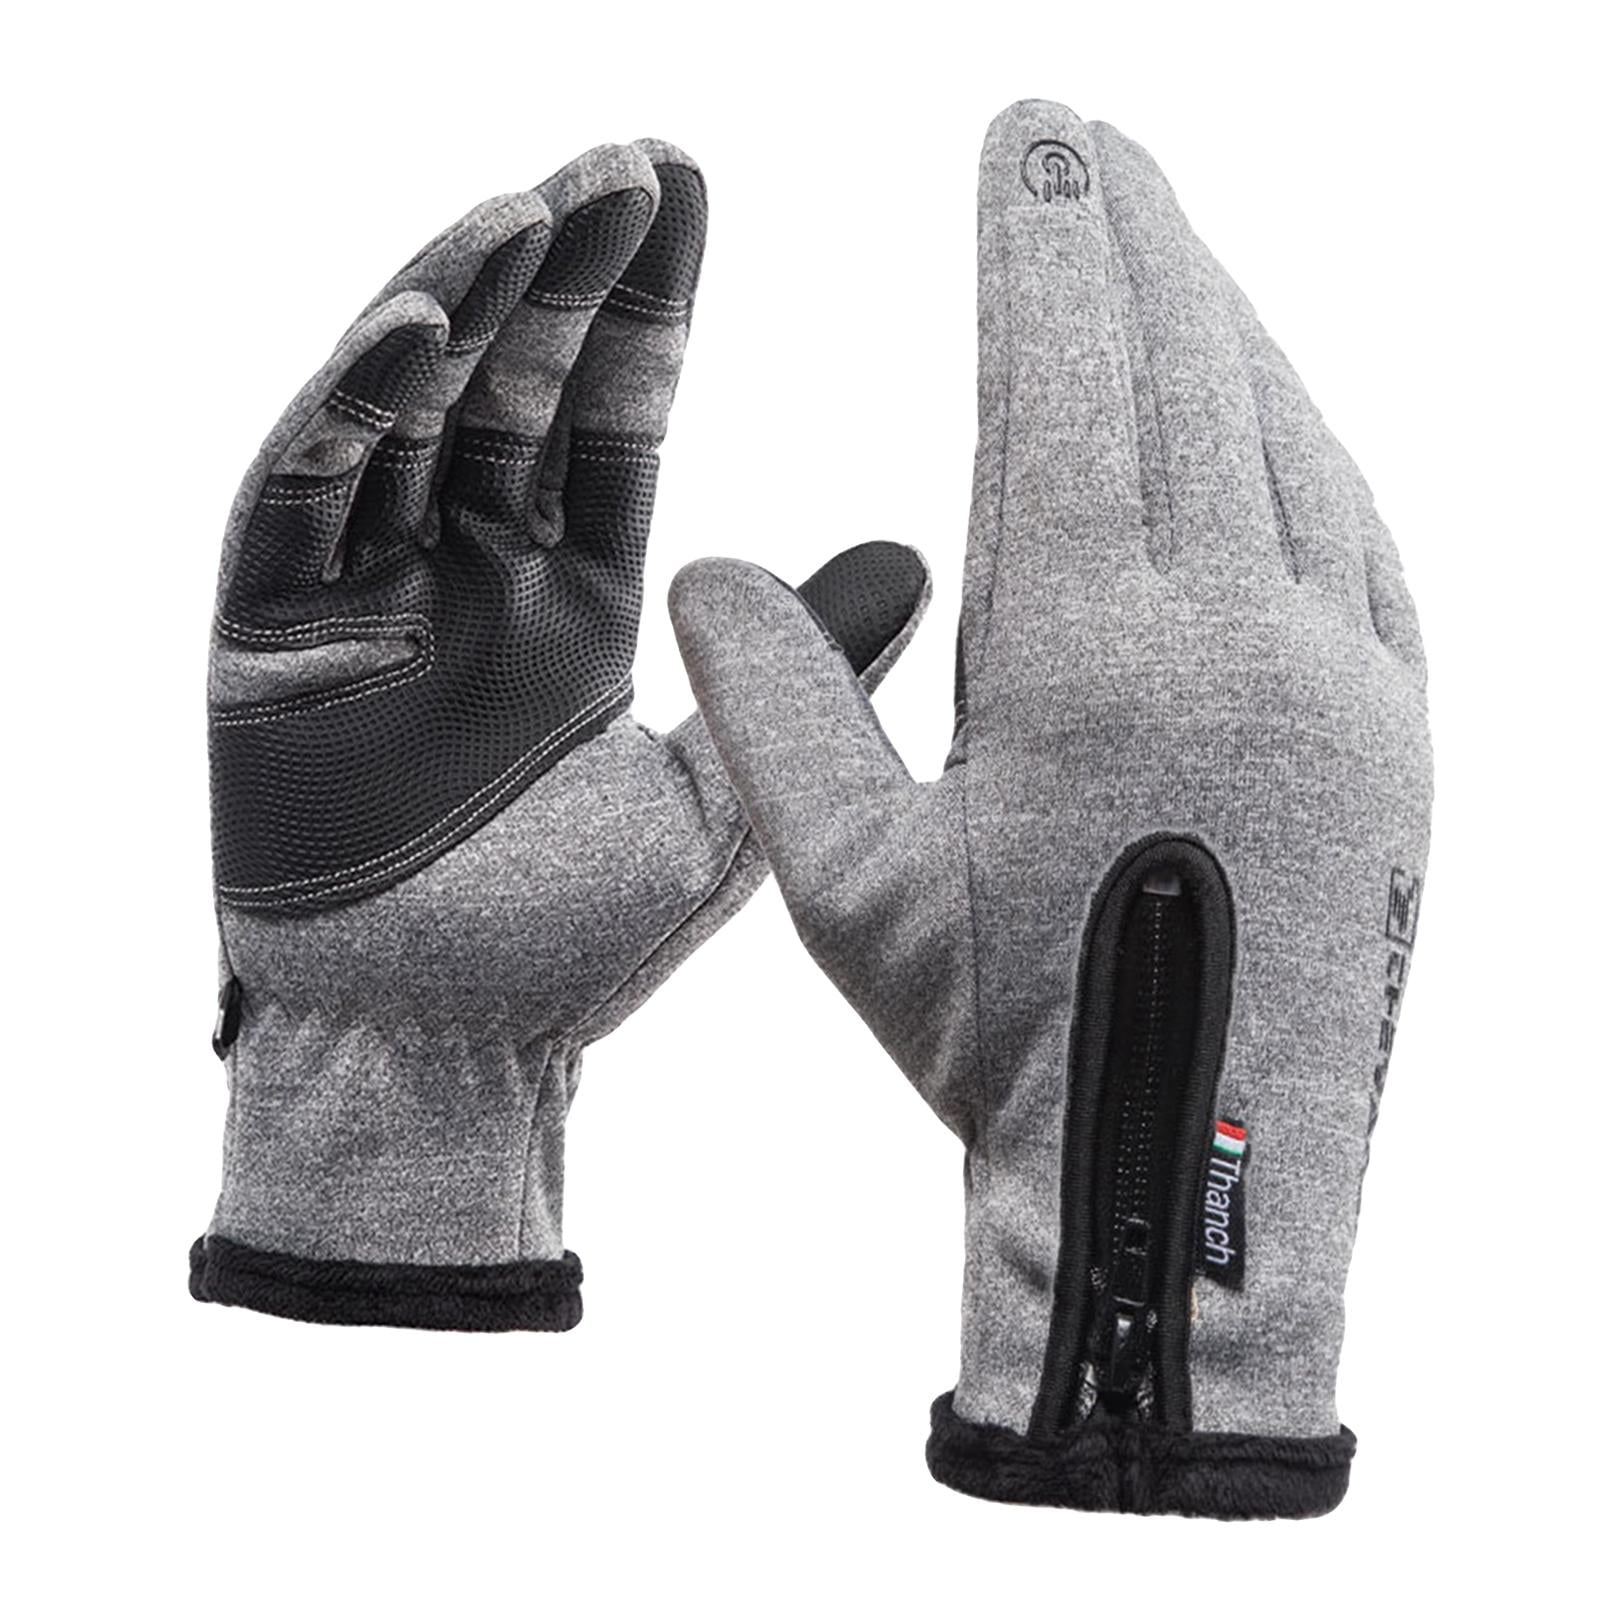 Winter Outdoor Cycling Hiking Sports Gloves Touch Screen Warm Men Women Mittens 